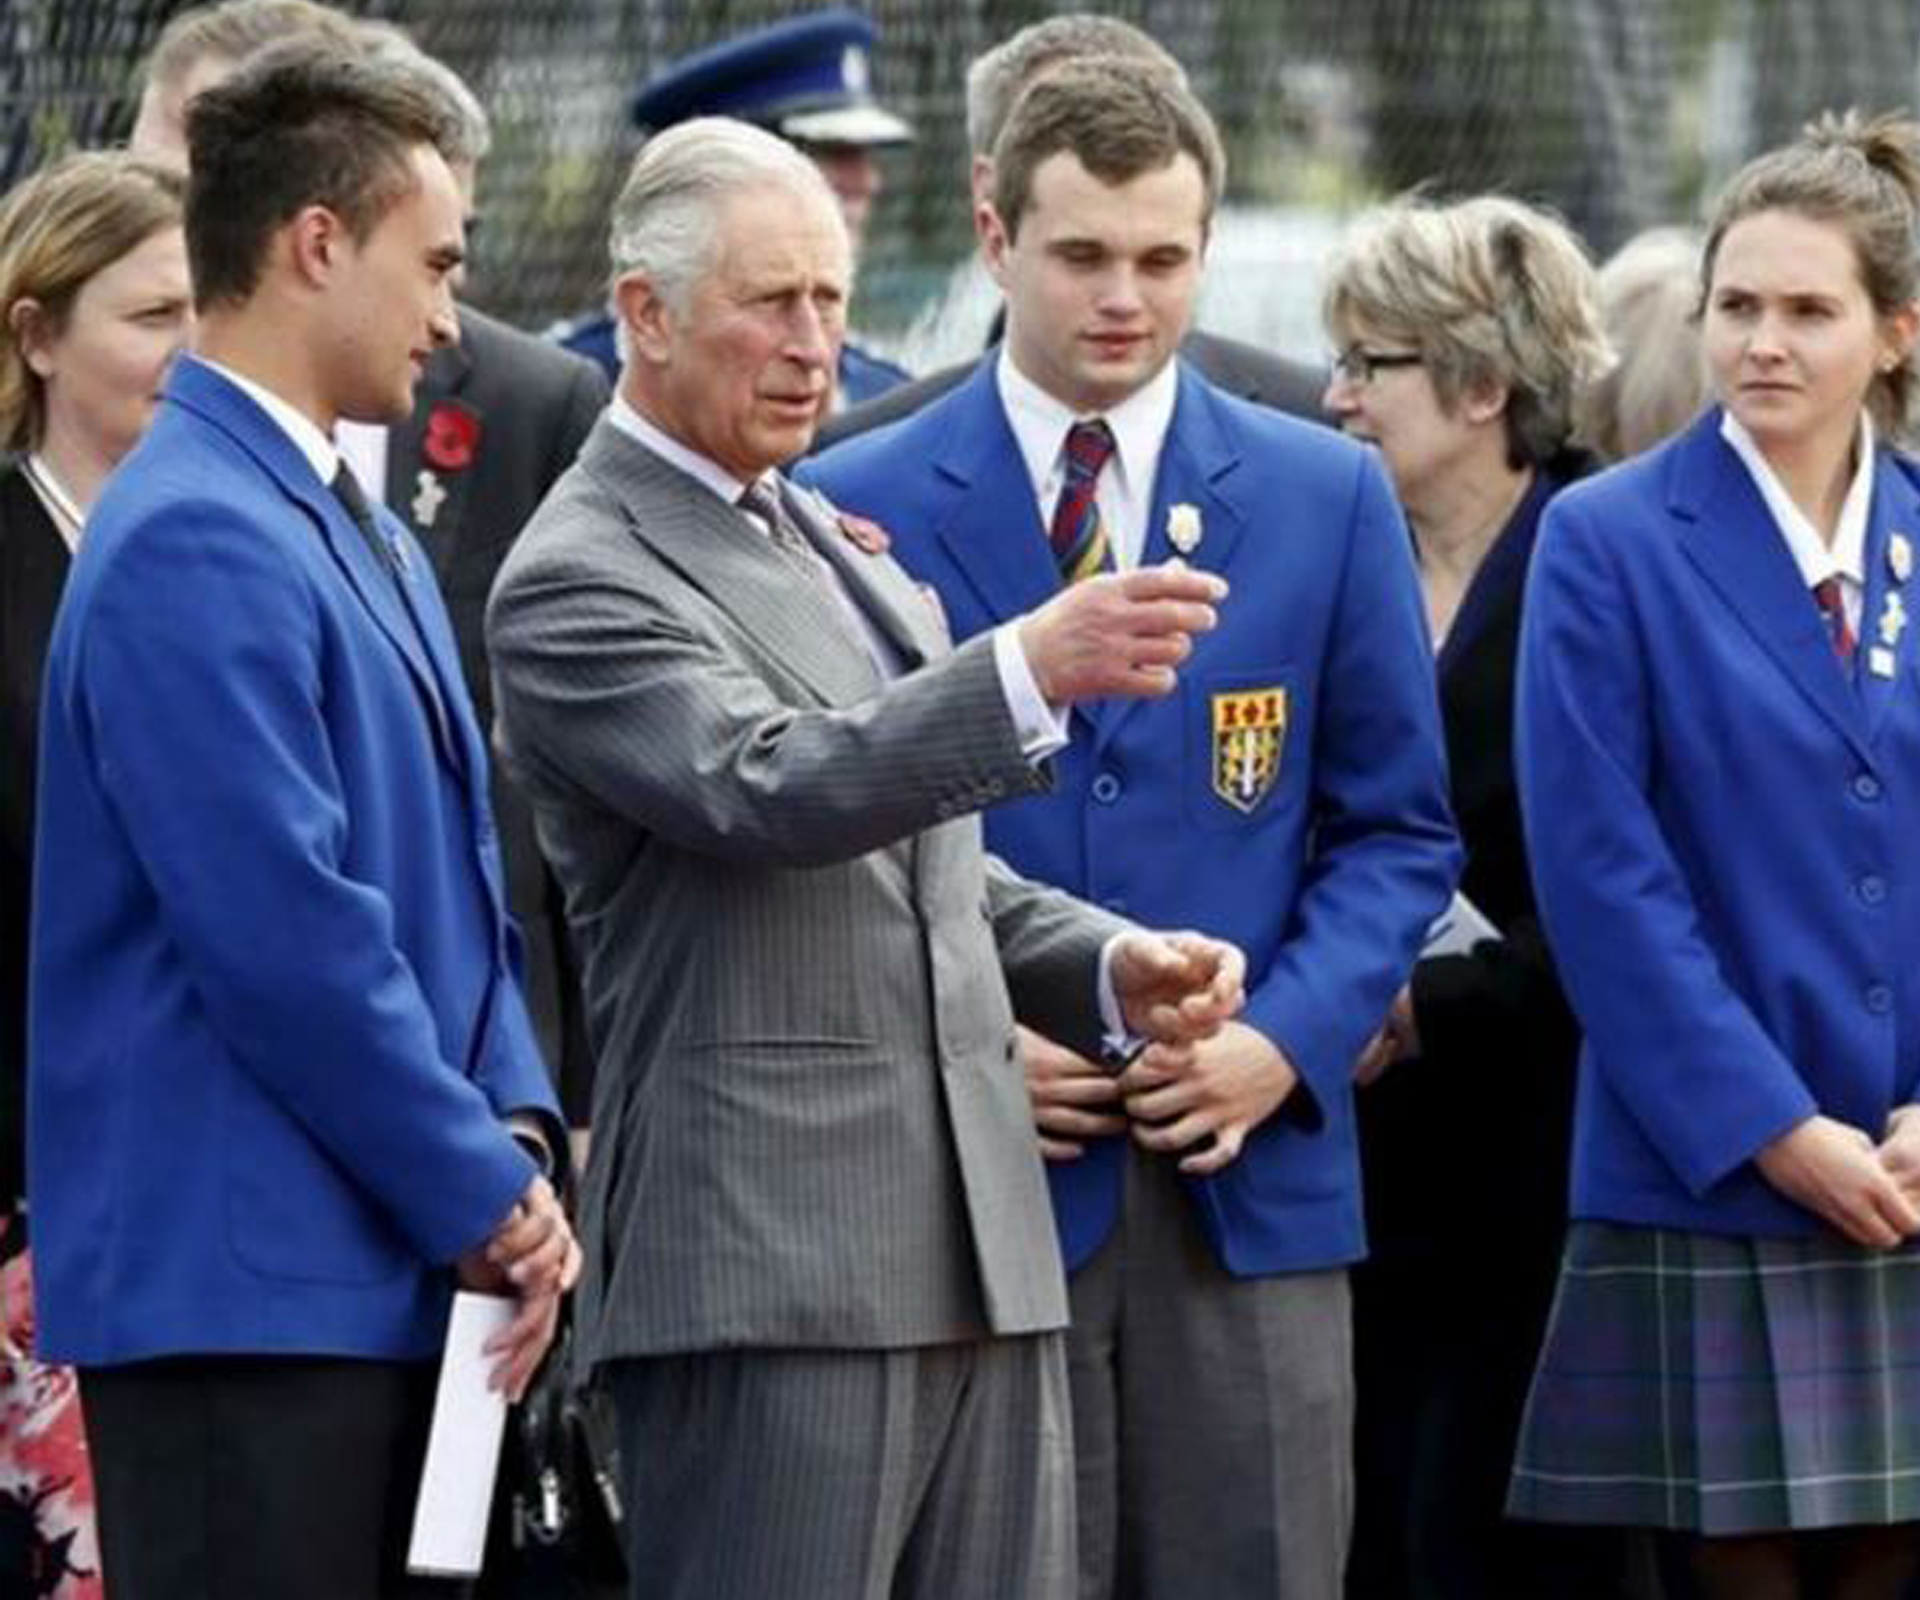 NZ Royal Tour: Kiwi kids greet Prince Charles with a haka